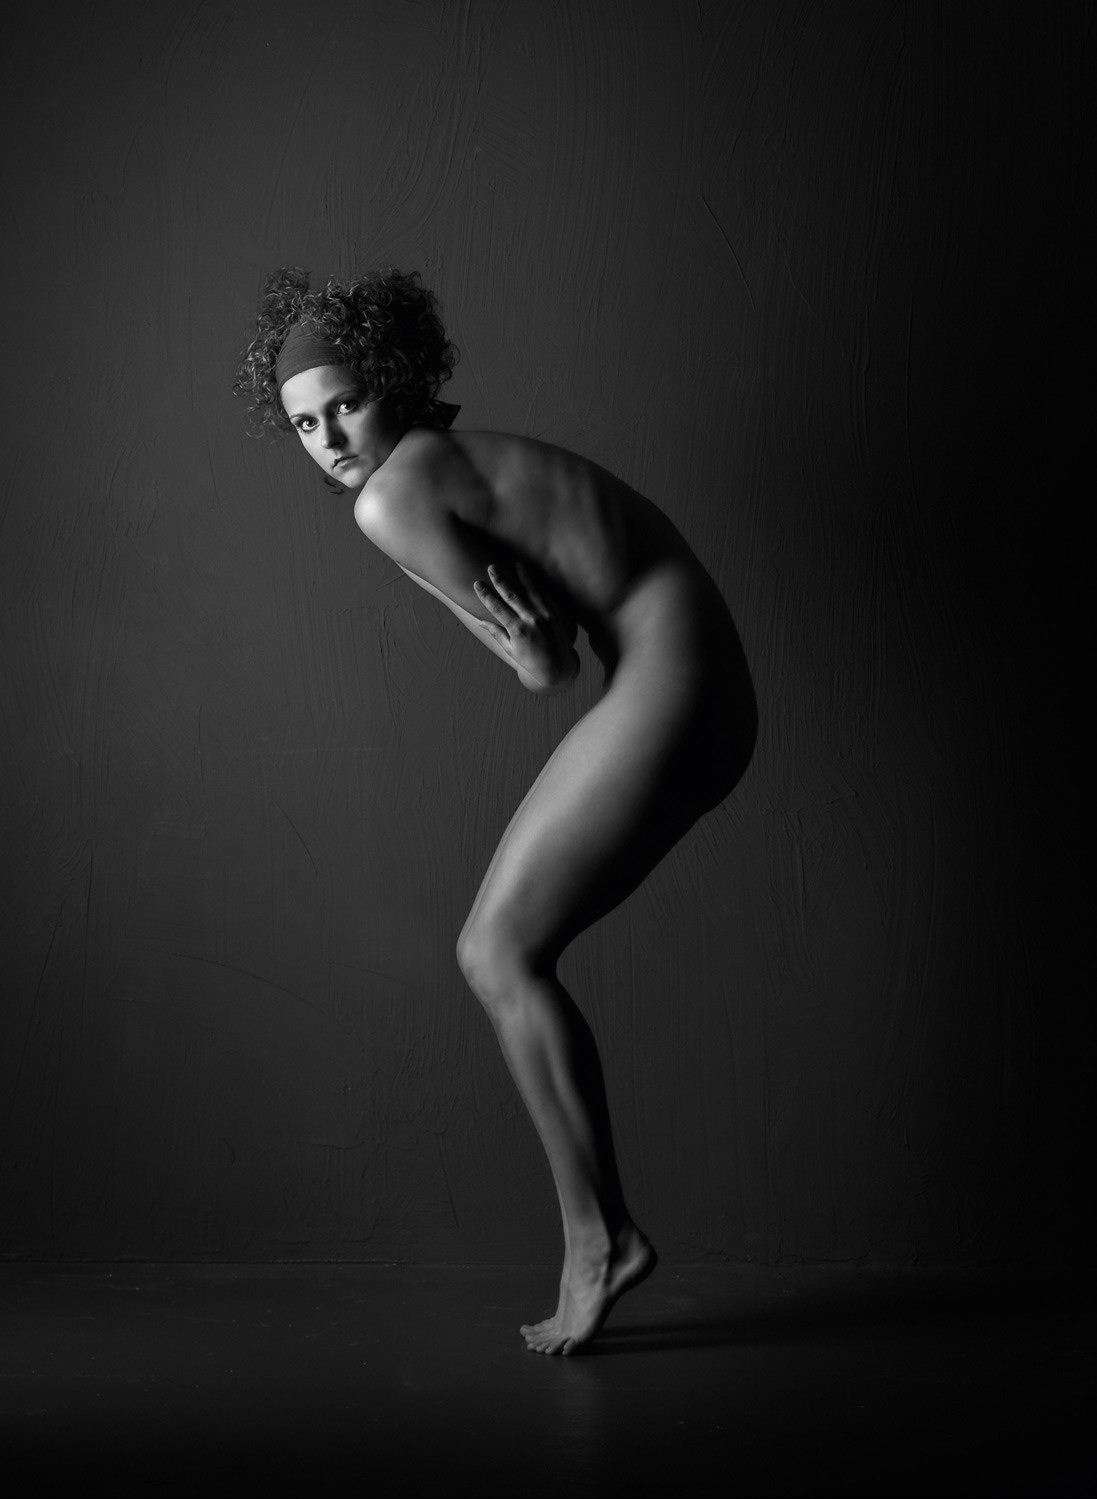 thorsten-jankowski-black-white-erotic-acts-nude-03